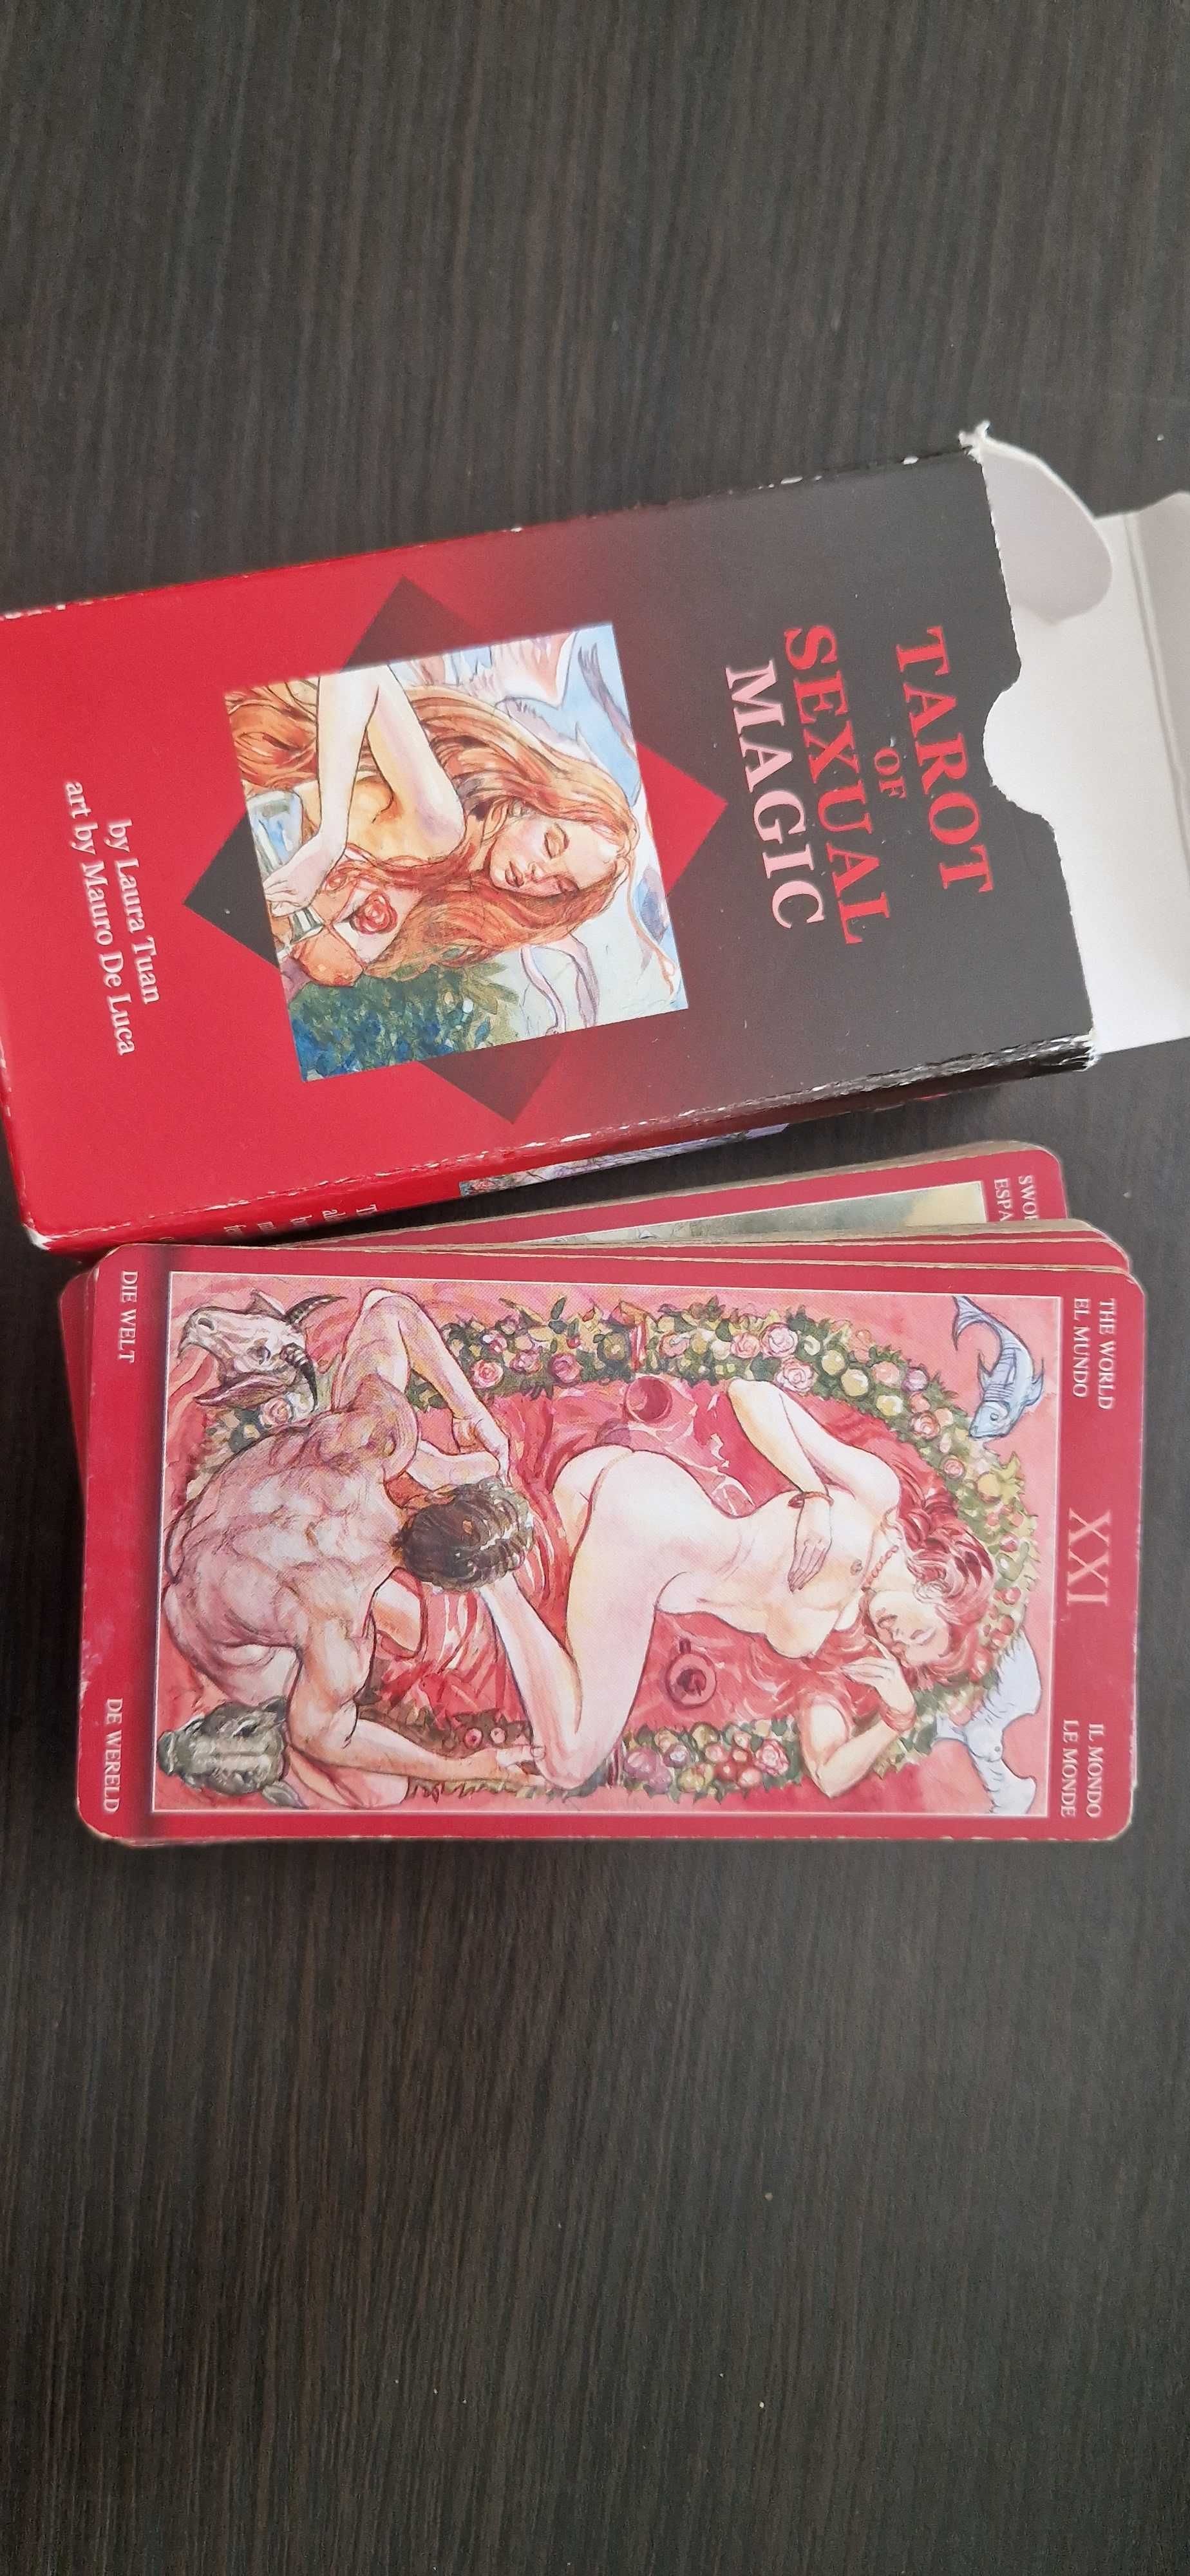 Karty tarot of sexuak magic